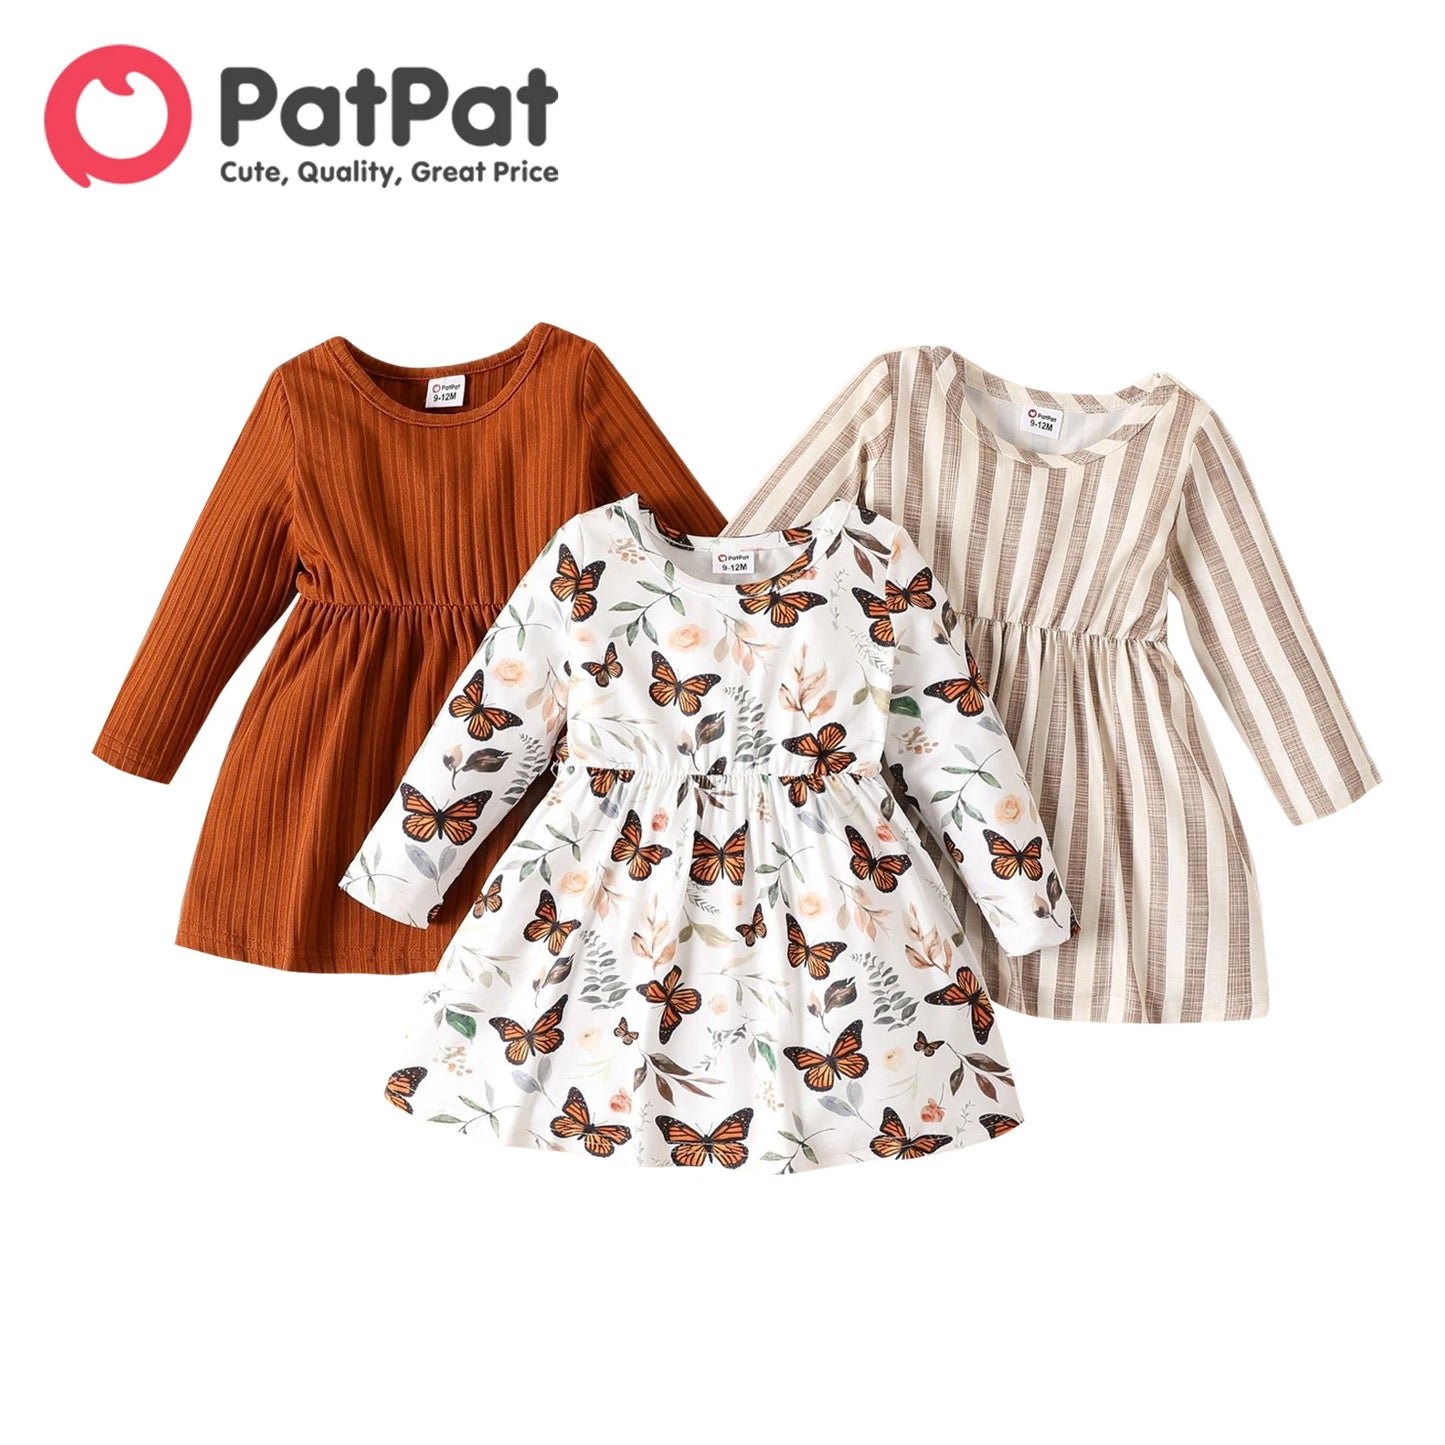 PatPat NewBorn Dresses Baby Girl